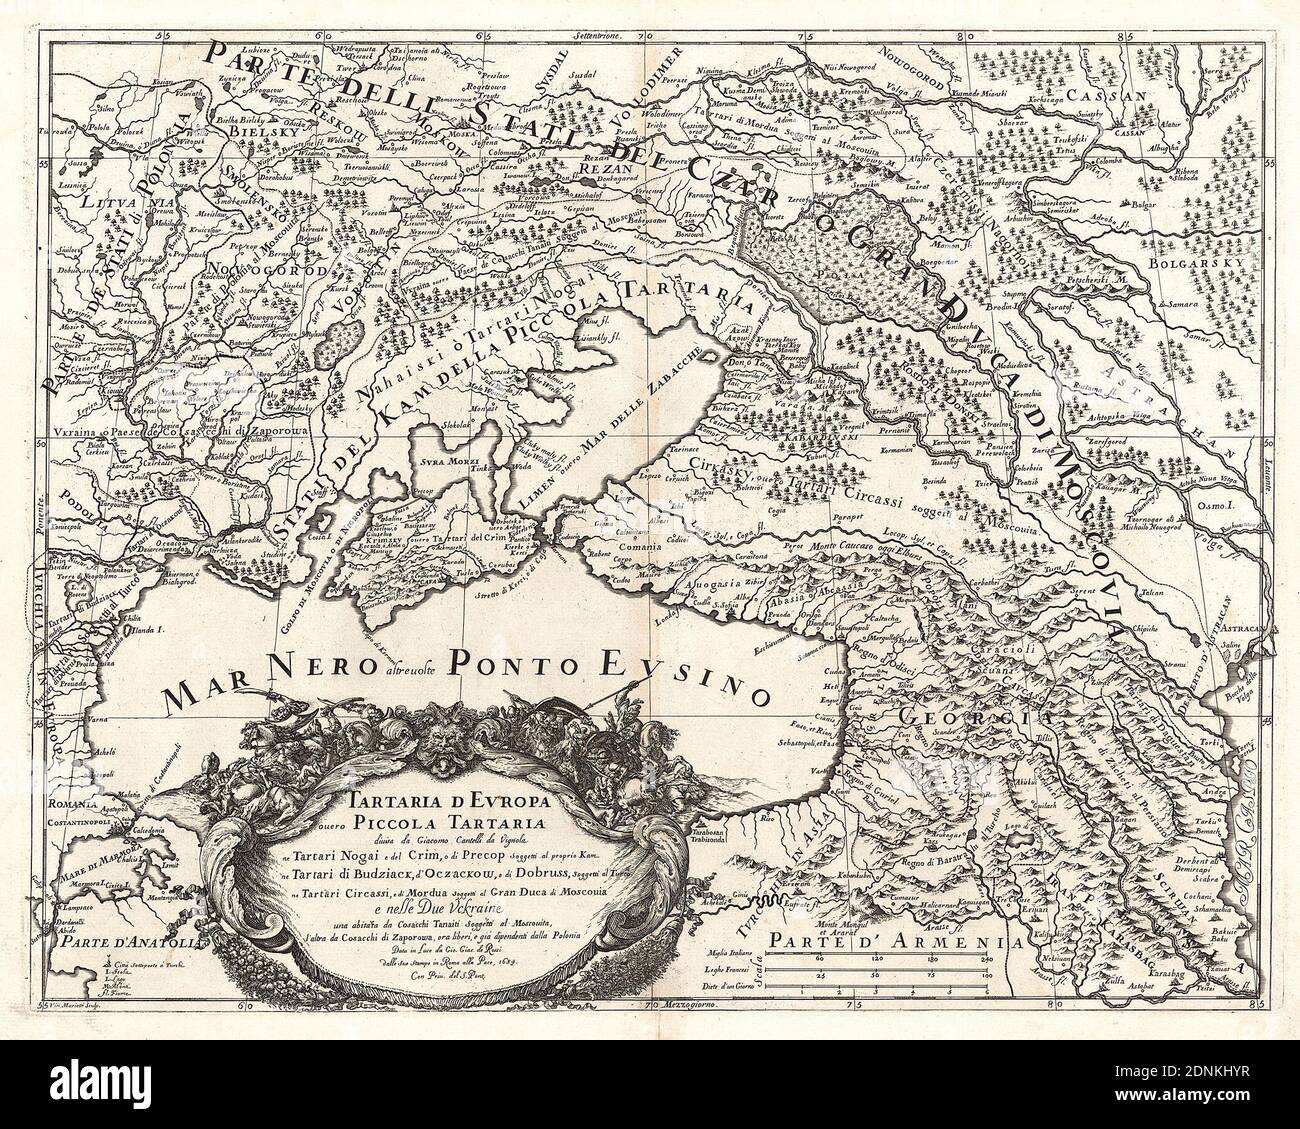 Map of the Eastern part of Europe (Ukraine, Crimea, Caucasus, Russia). 'Tartaria d Evropa ouero Piccola Tartaria'. Map of 1684. Stock Photo